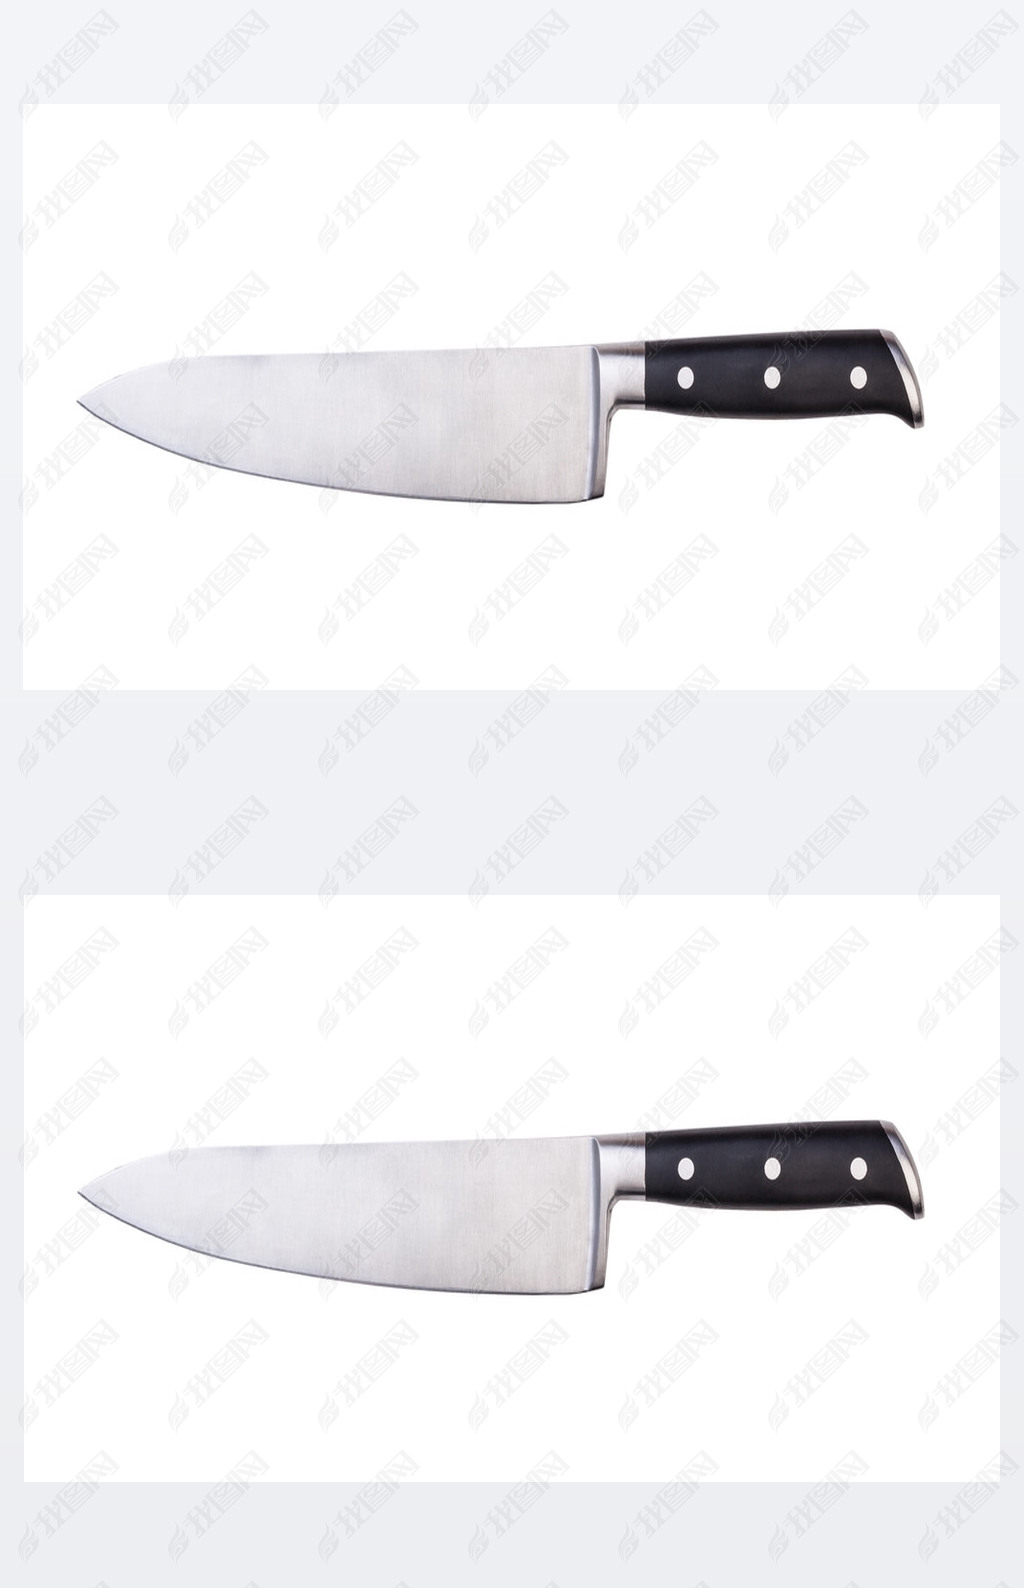 steel kitchen knives